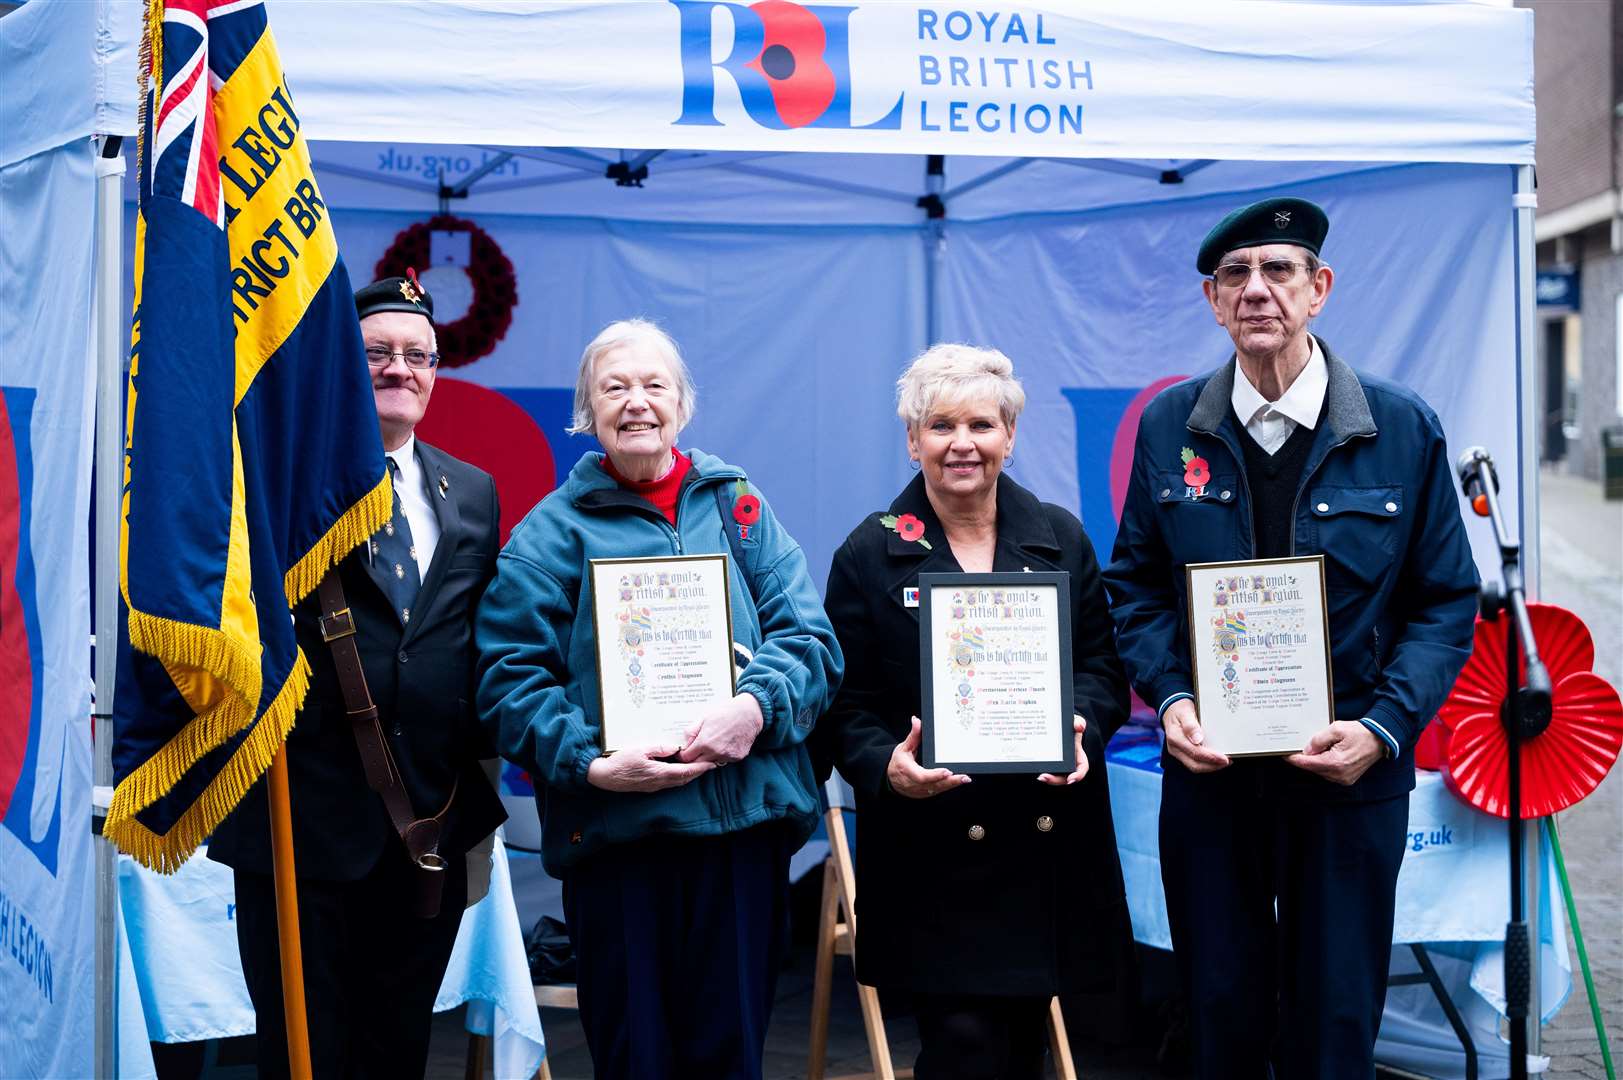 Launch of this year's Royal British Legion Poppy Appeal in Lynn